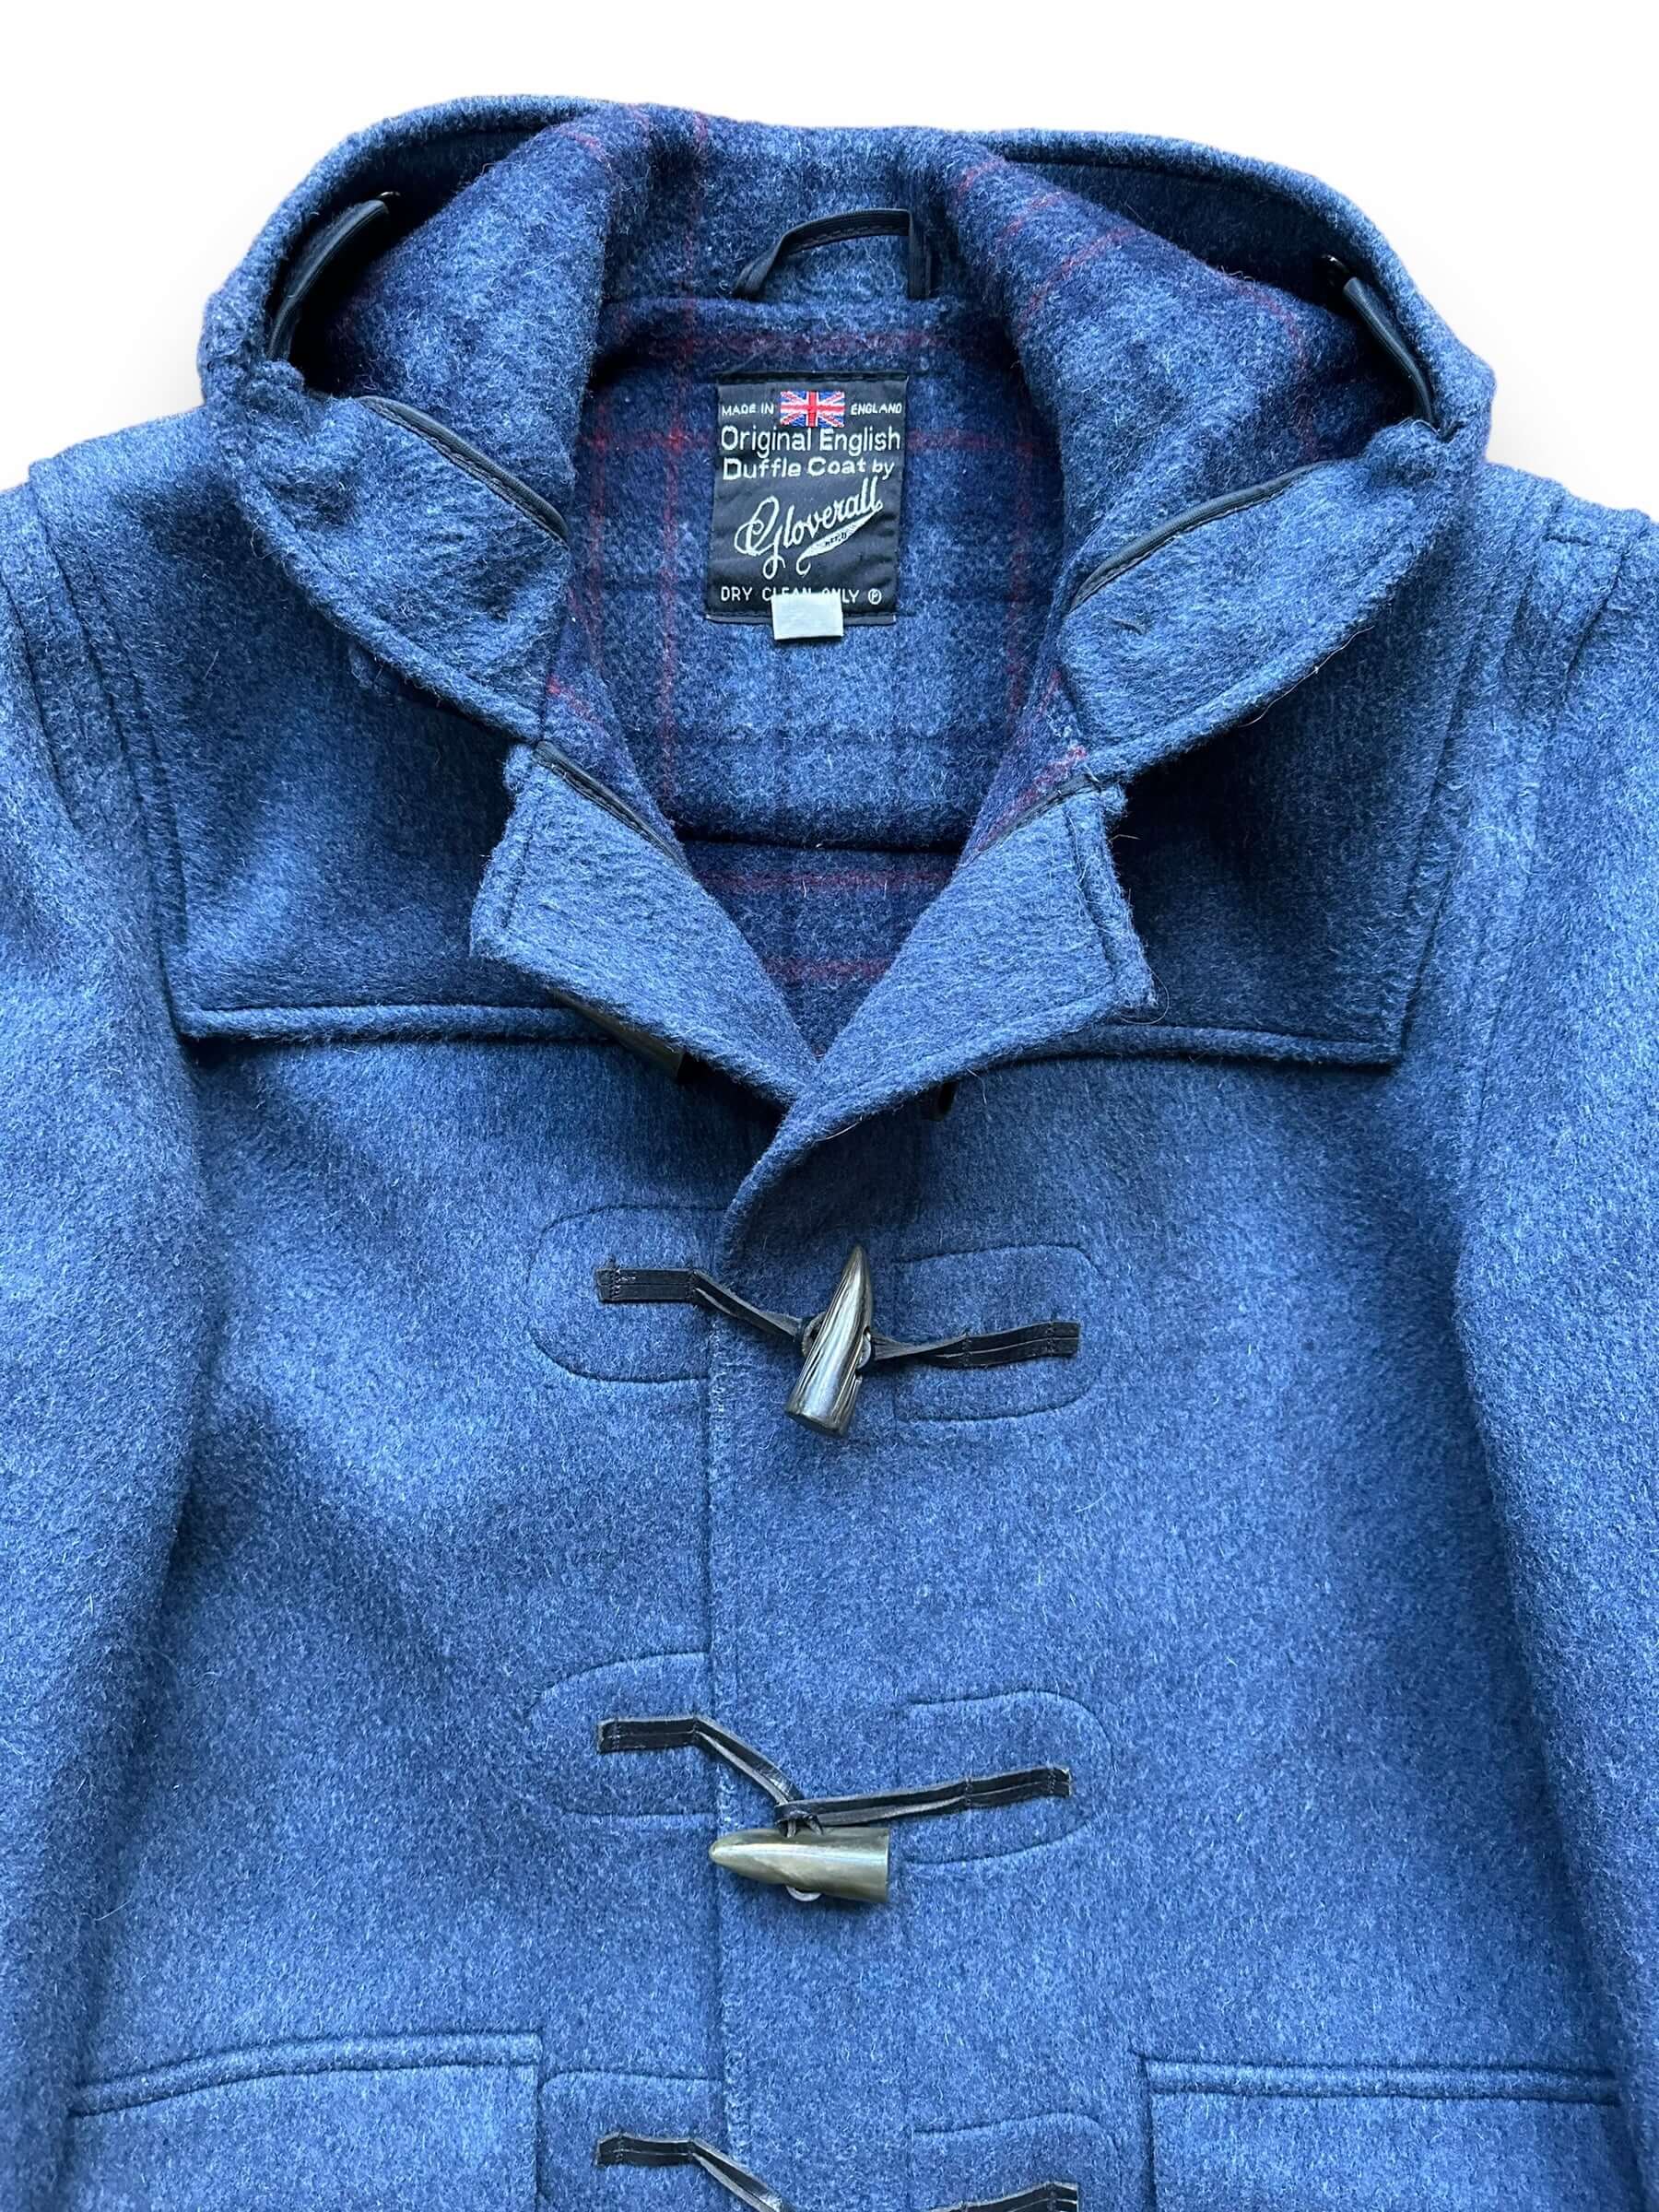 Upper Front View of Vintage Gloverall Duffle Coat SZ L | Seattle Vintage Wool Coat | Barn Owl Vintage Seattle